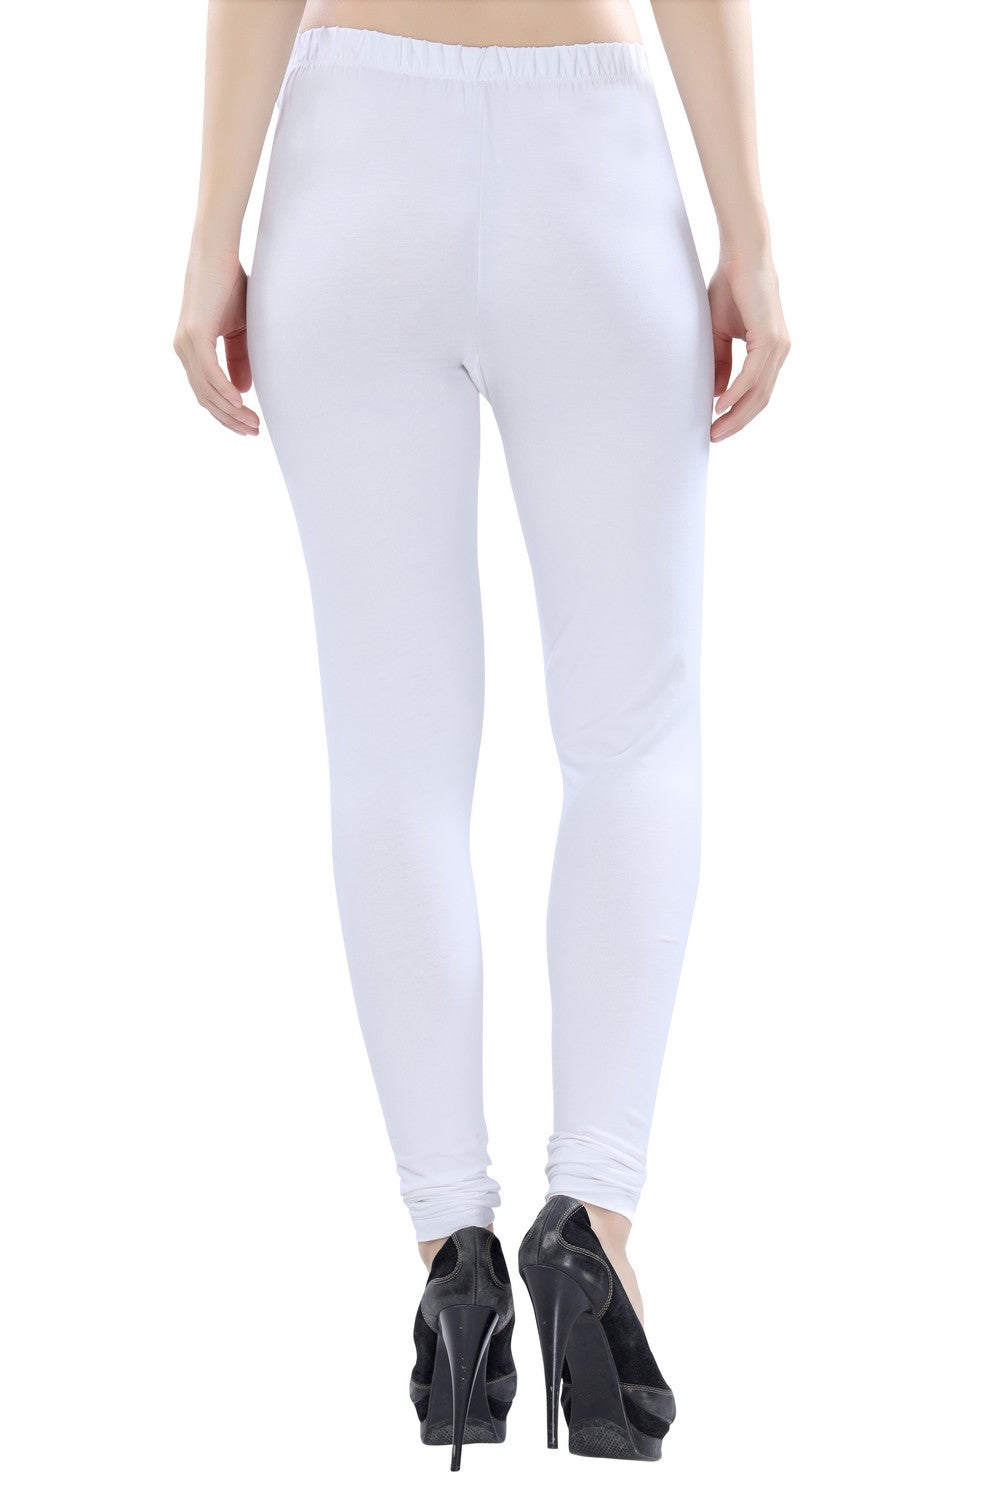 TRASA Women's Cotton 4 Way Stretchable Slim Fit Churidar Leggings - Na –